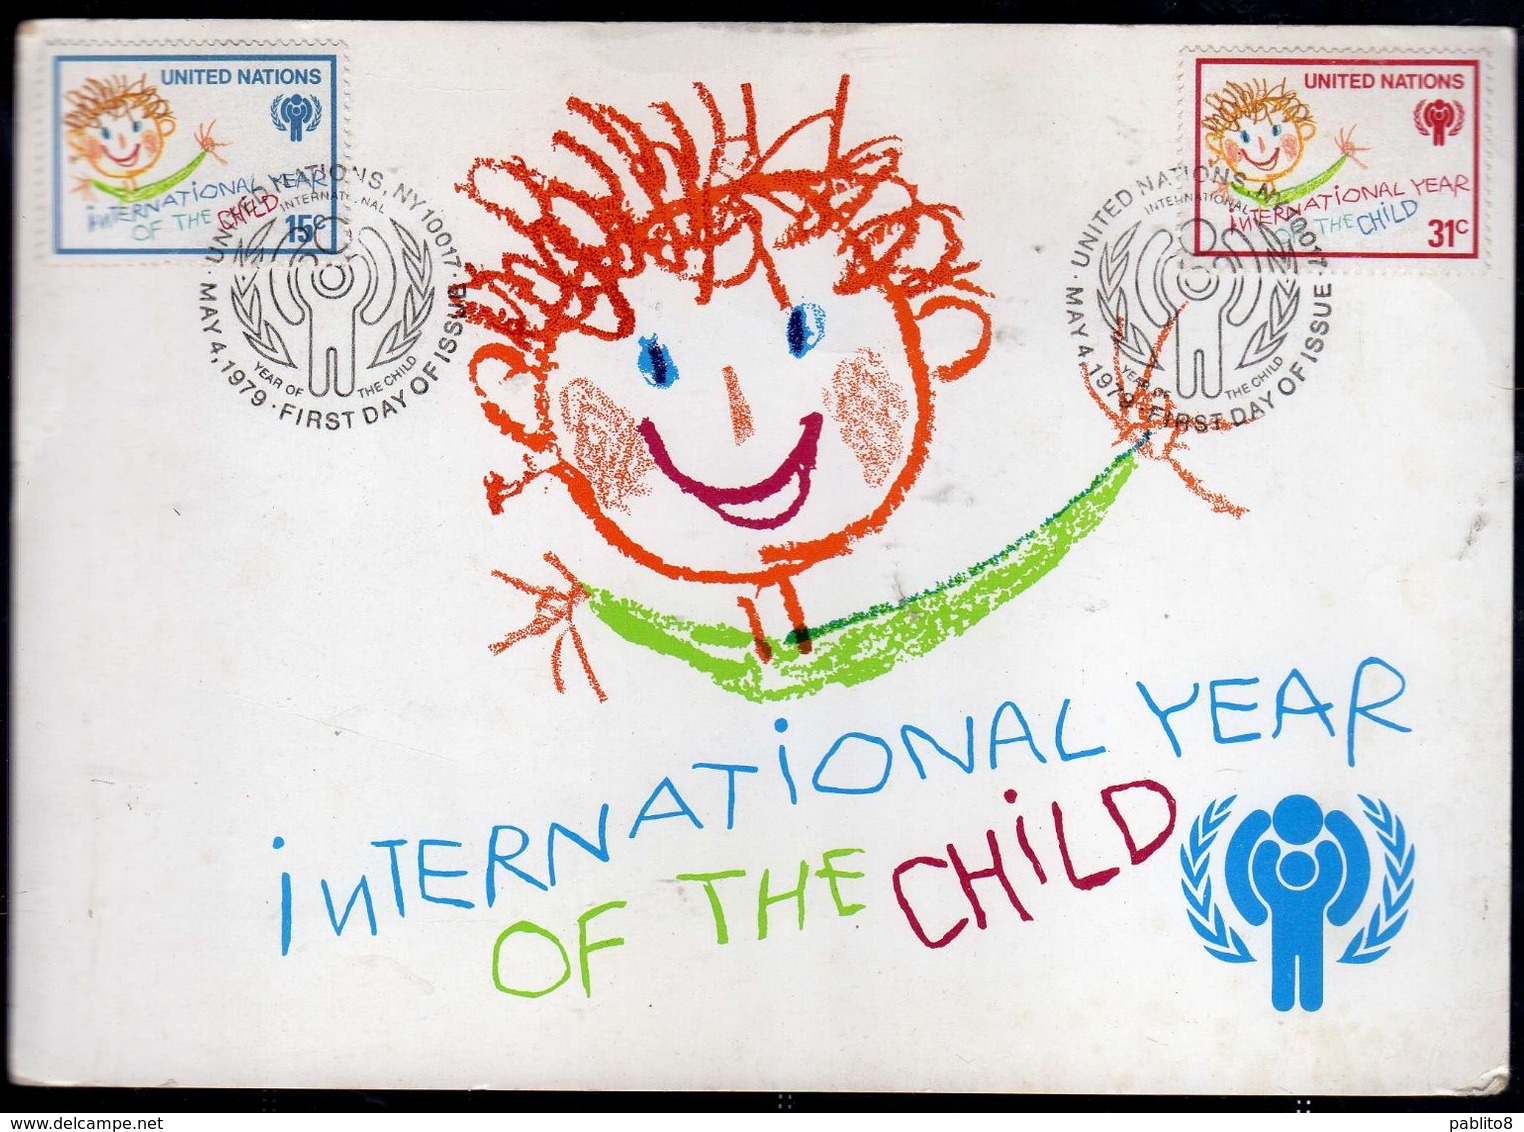 UNITED NATIONS NEW YORK ONU UN UNO 4 5 1979 INTERNATIONAL YEAR OF THE CHILD COMPLETE SET FDC MAXI CARD CARTOLINA MAXIMUM - Maximumkarten